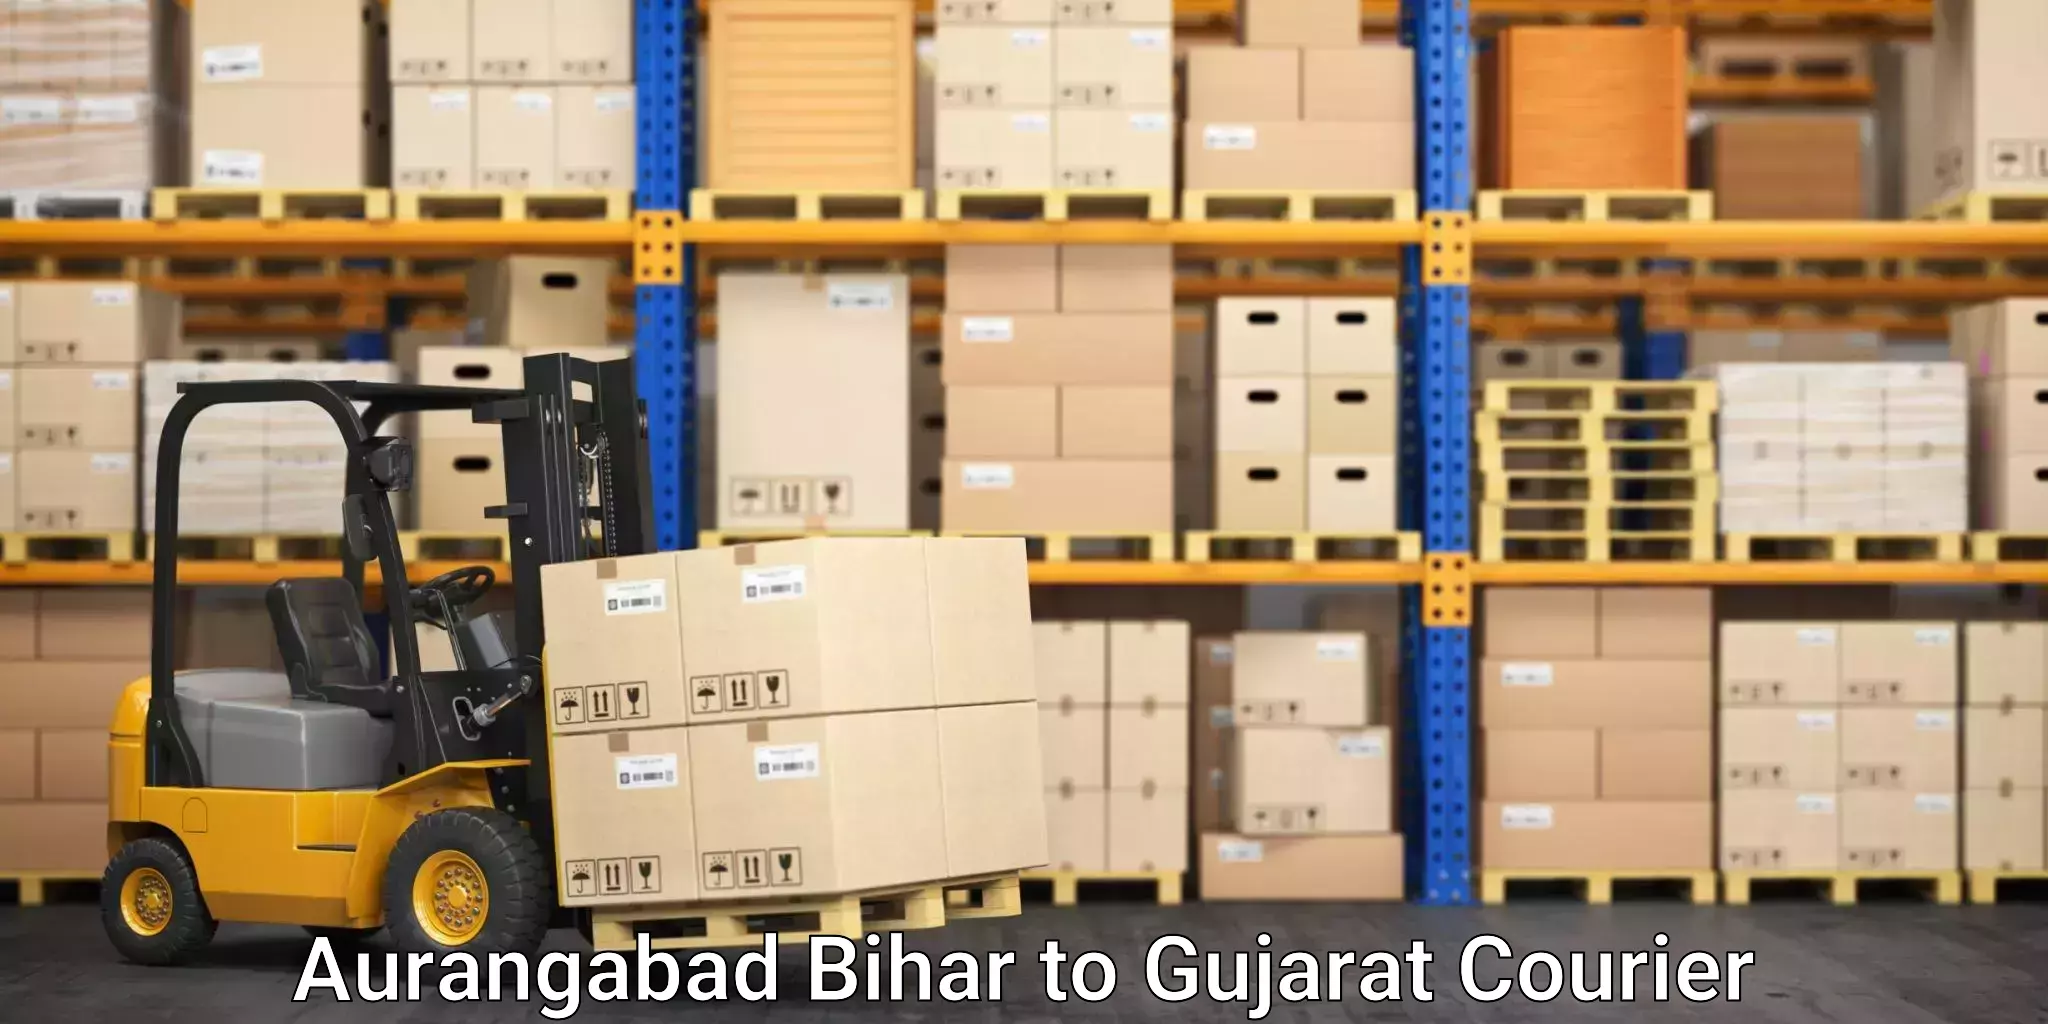 Efficient relocation services Aurangabad Bihar to Jamnagar